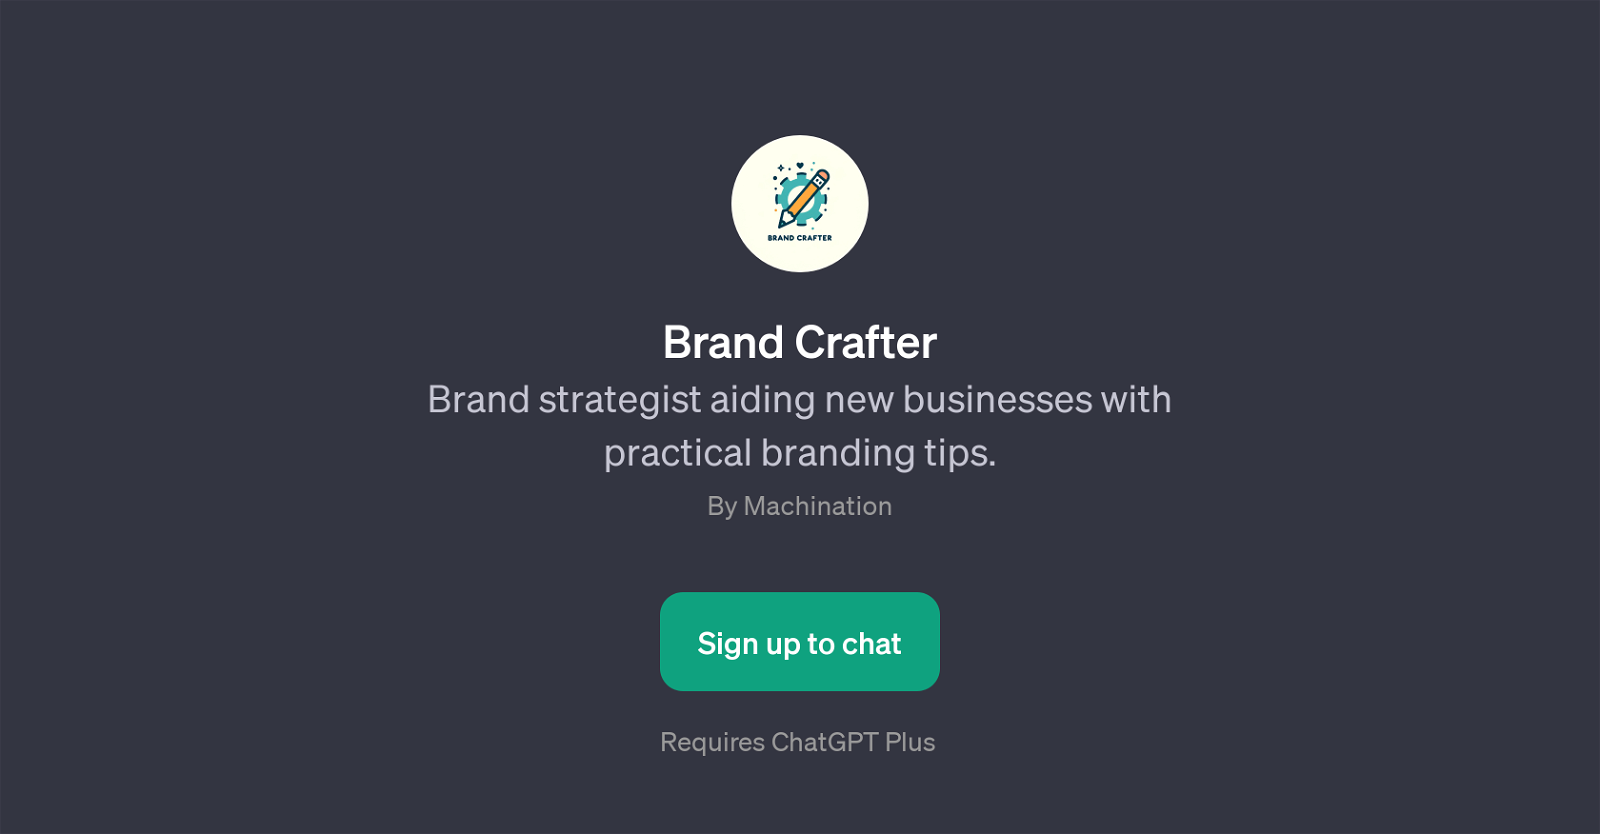 Brand Crafter website